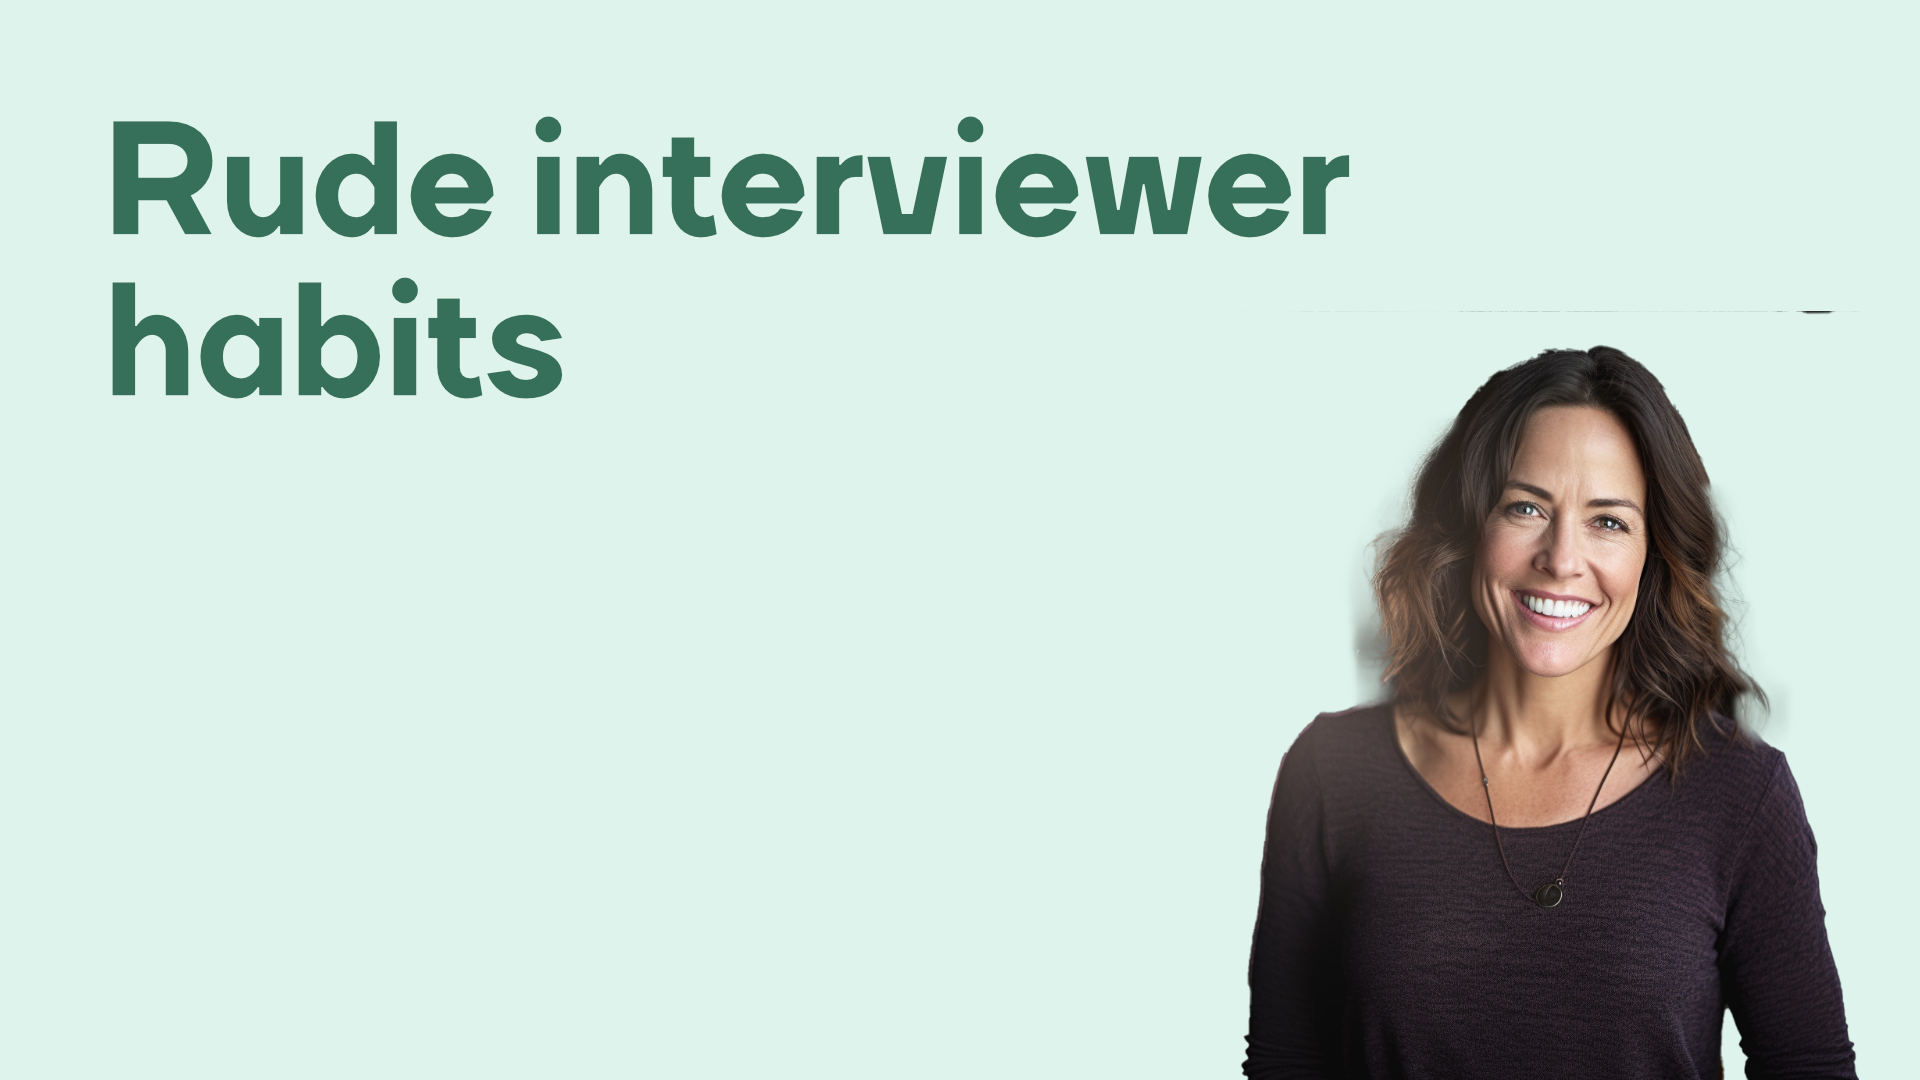 Rude interviewer habits